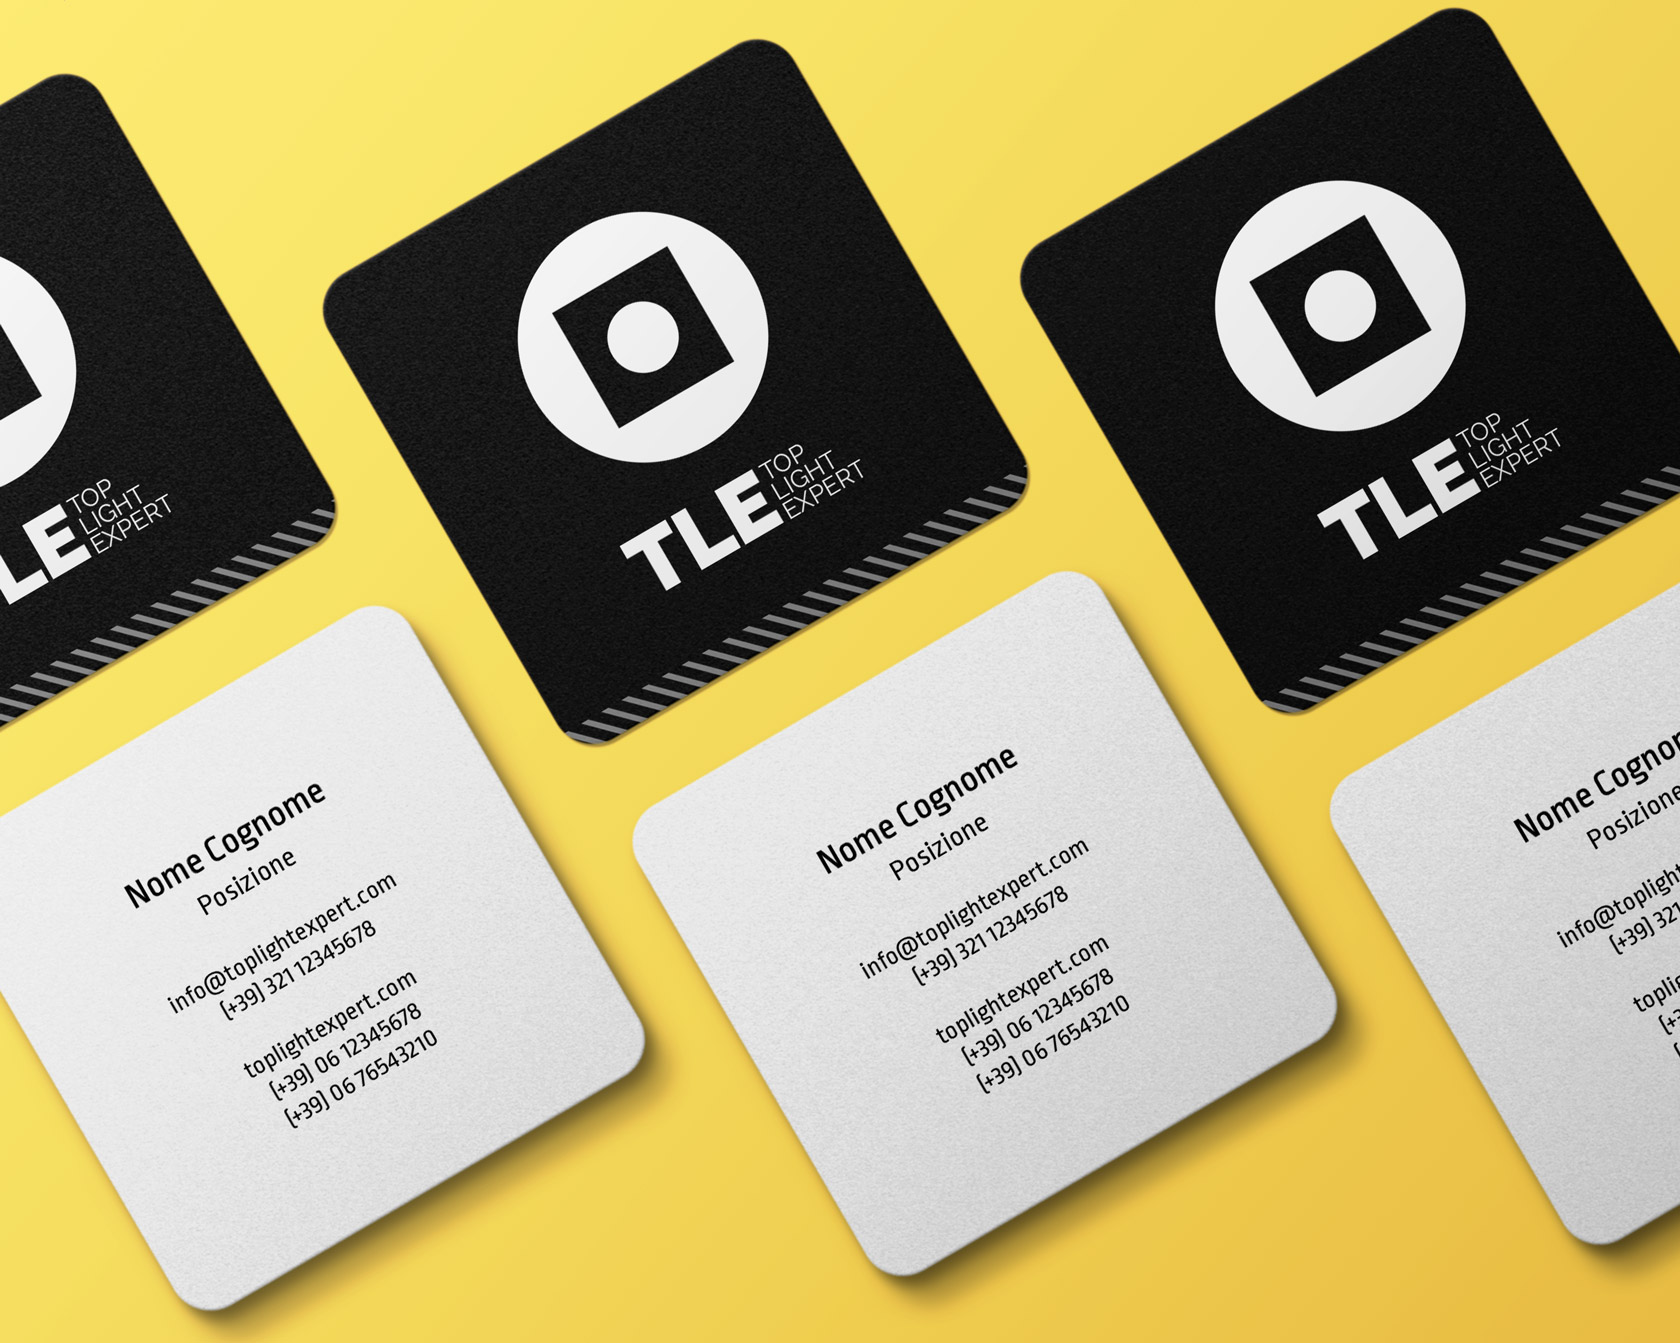 Top Light Expert - Brand Identity - Business Cards